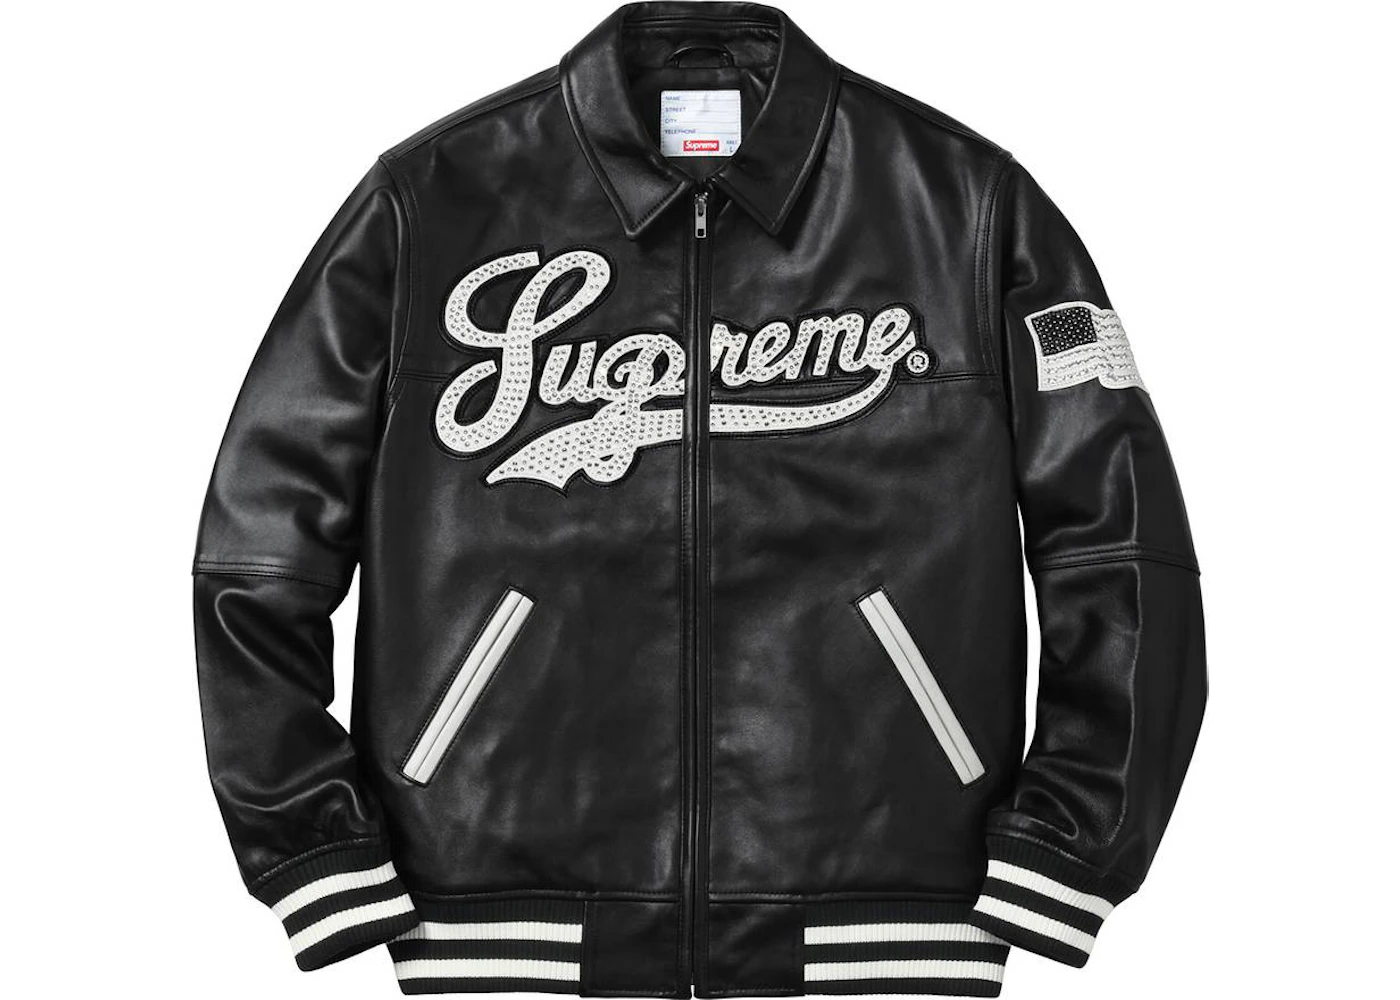 medley Refrein Atticus Supreme Uptown Studded Leather Varsity Jacket Black - SS16 - US